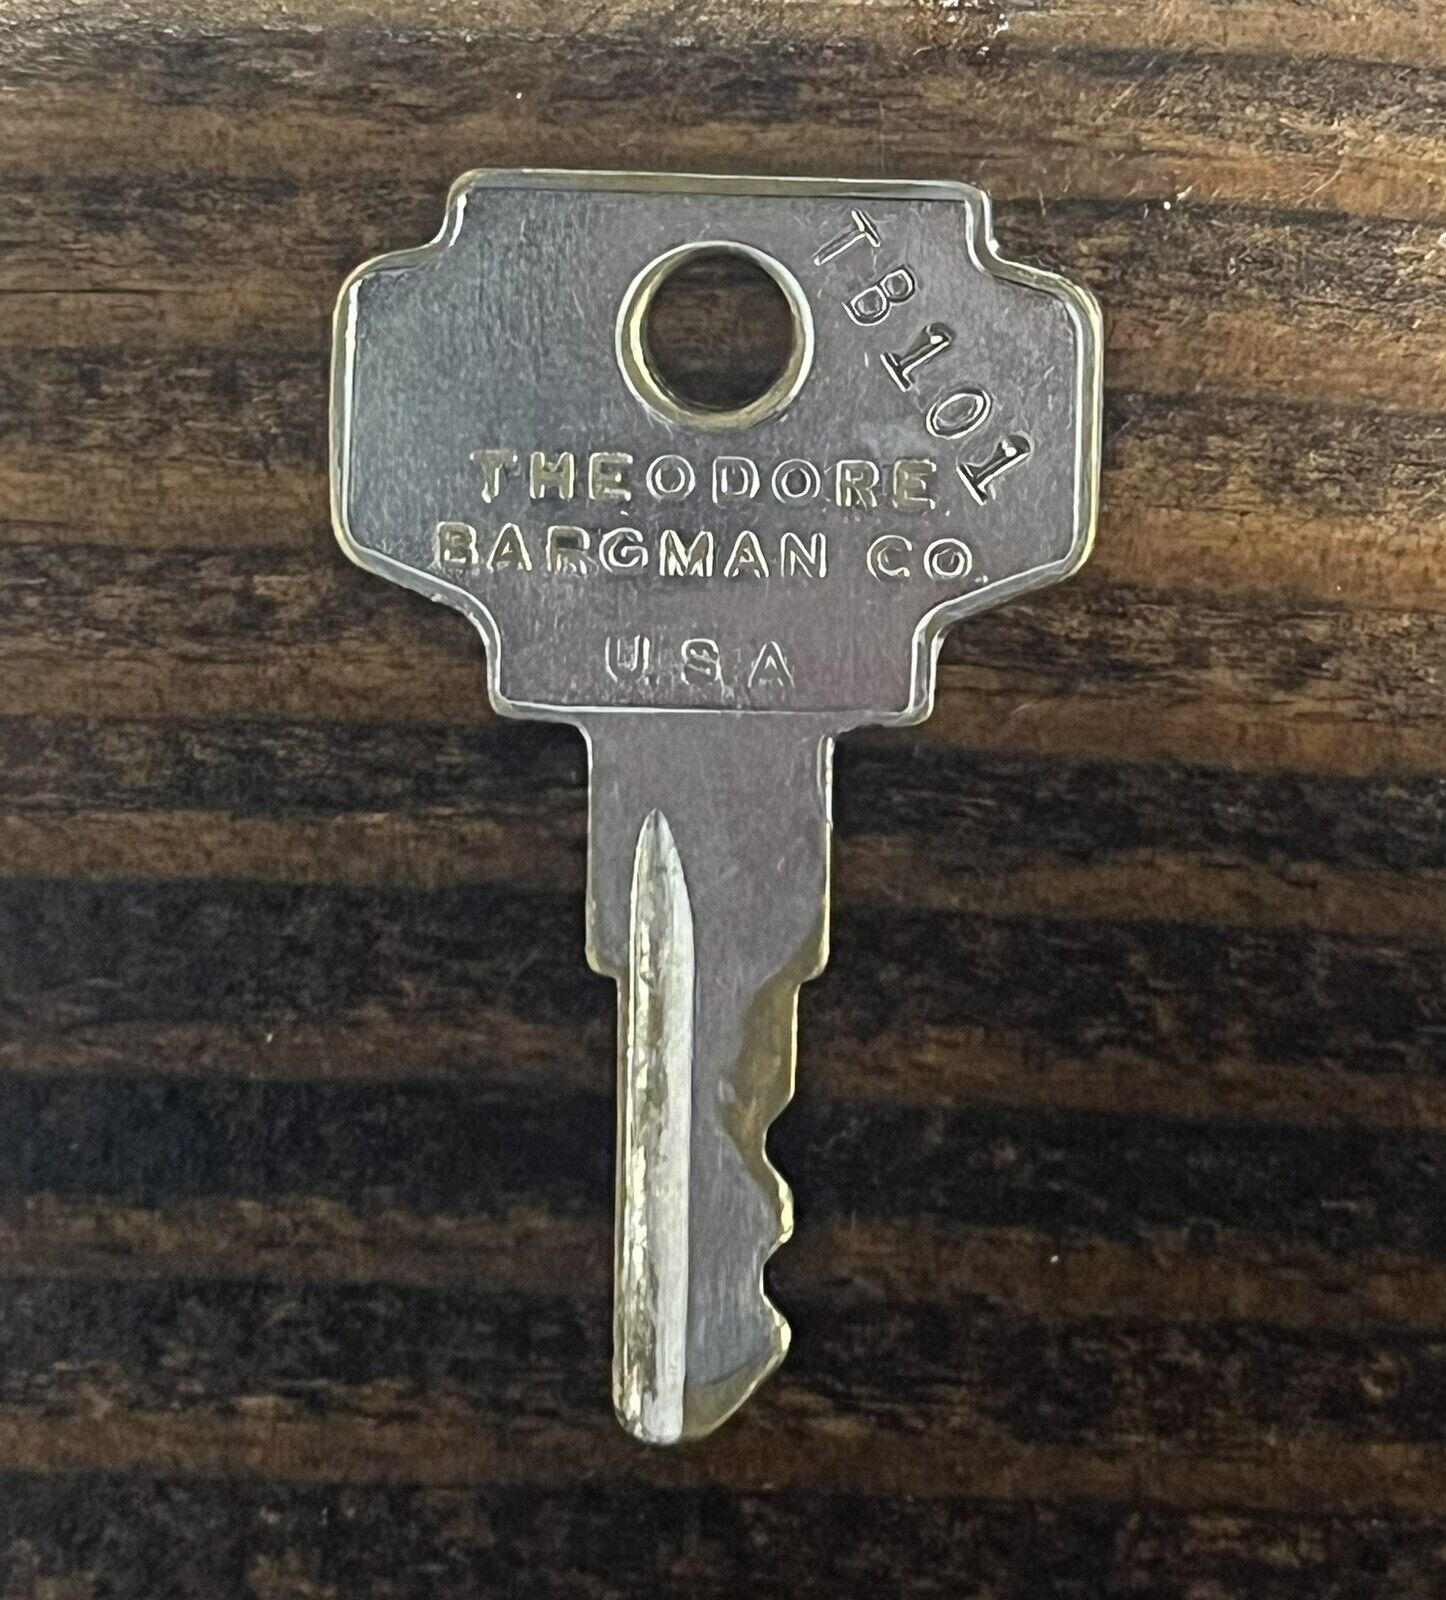 Vintage Theodore Bargman Co ‘B’ USA Key 